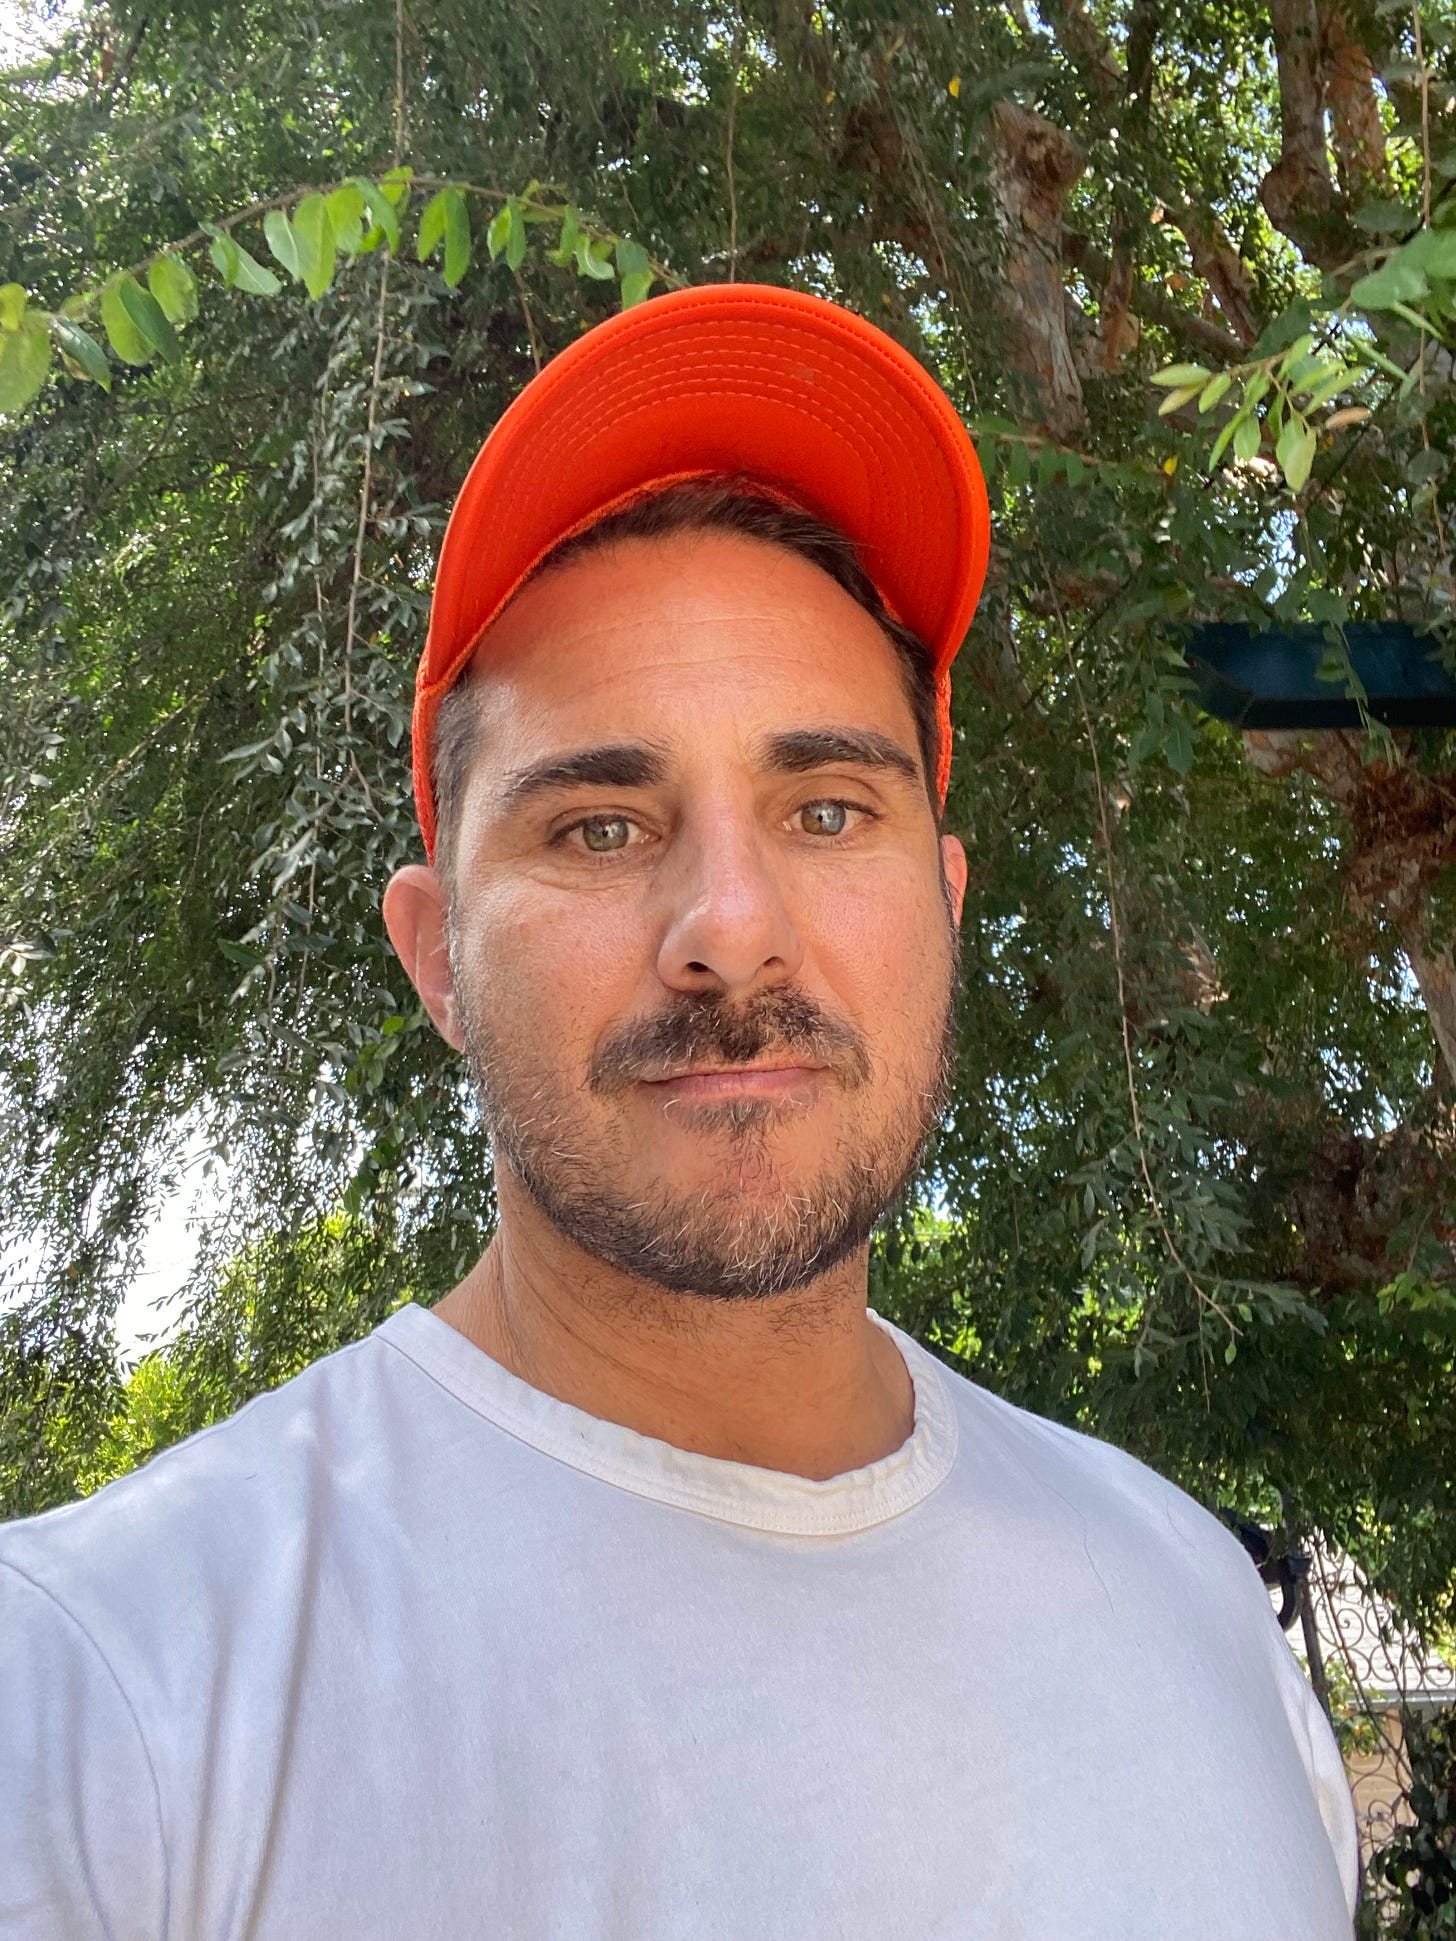 A.J. Daulerio selfie with orange baseball cap